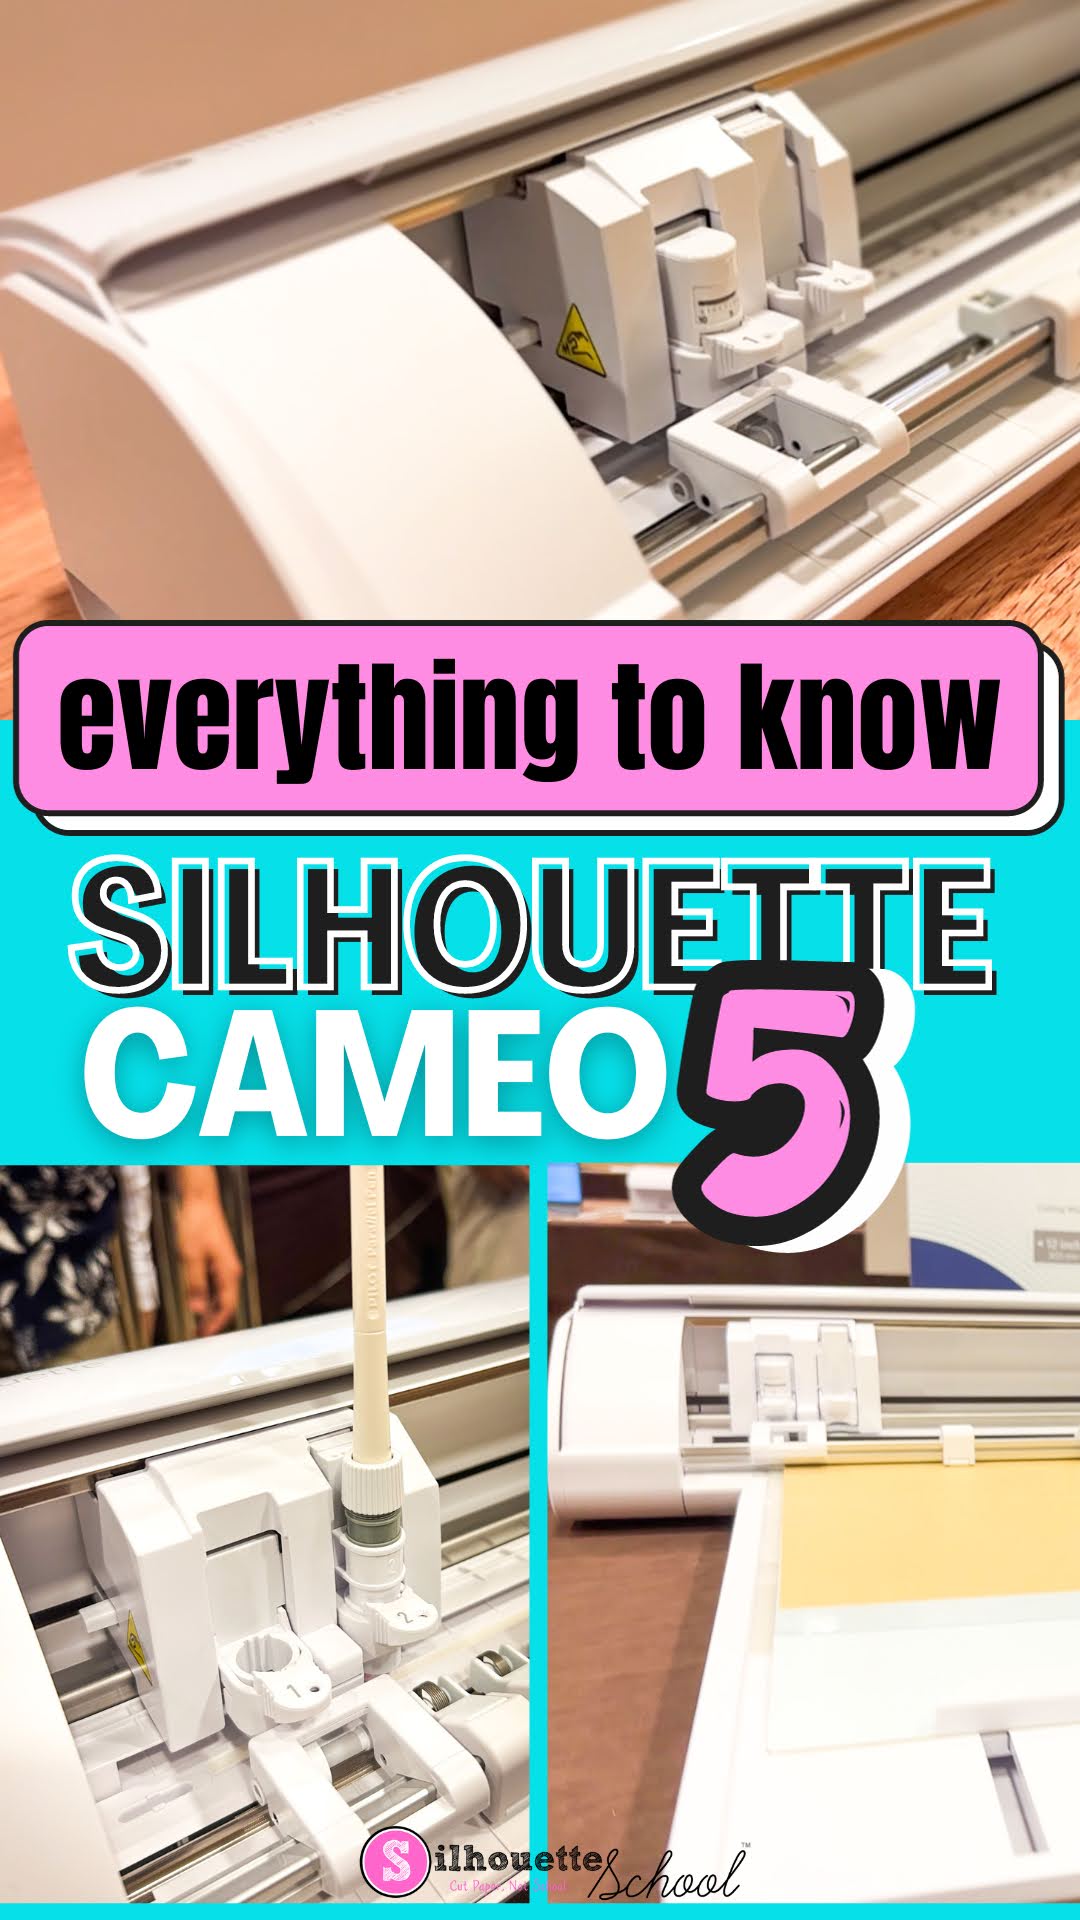 Silhouette CAMEO 5 Plus - 15 Vinyl Cutter